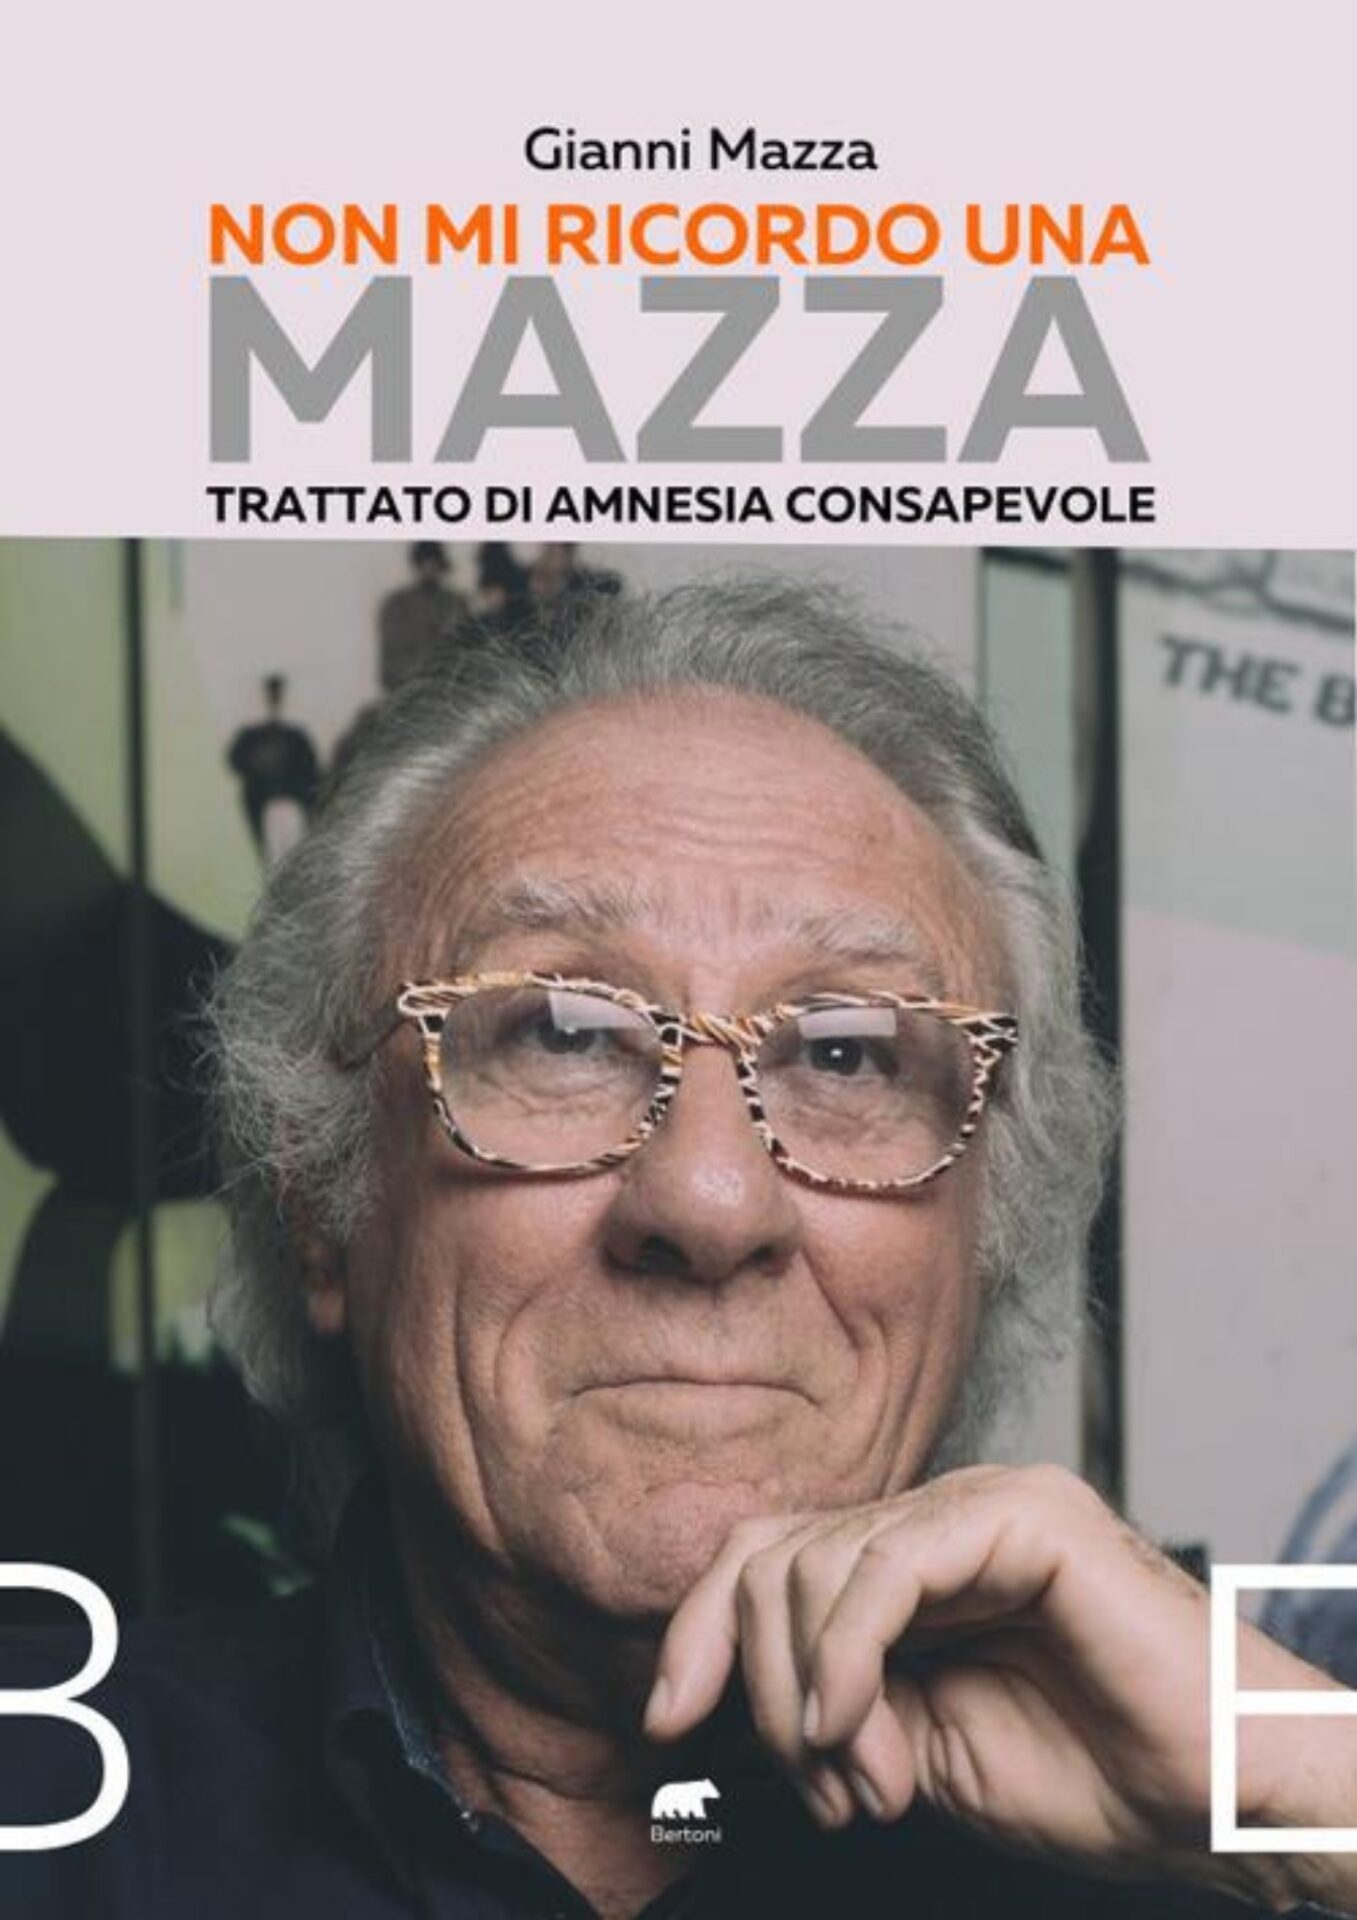 Gianni Mazza libro